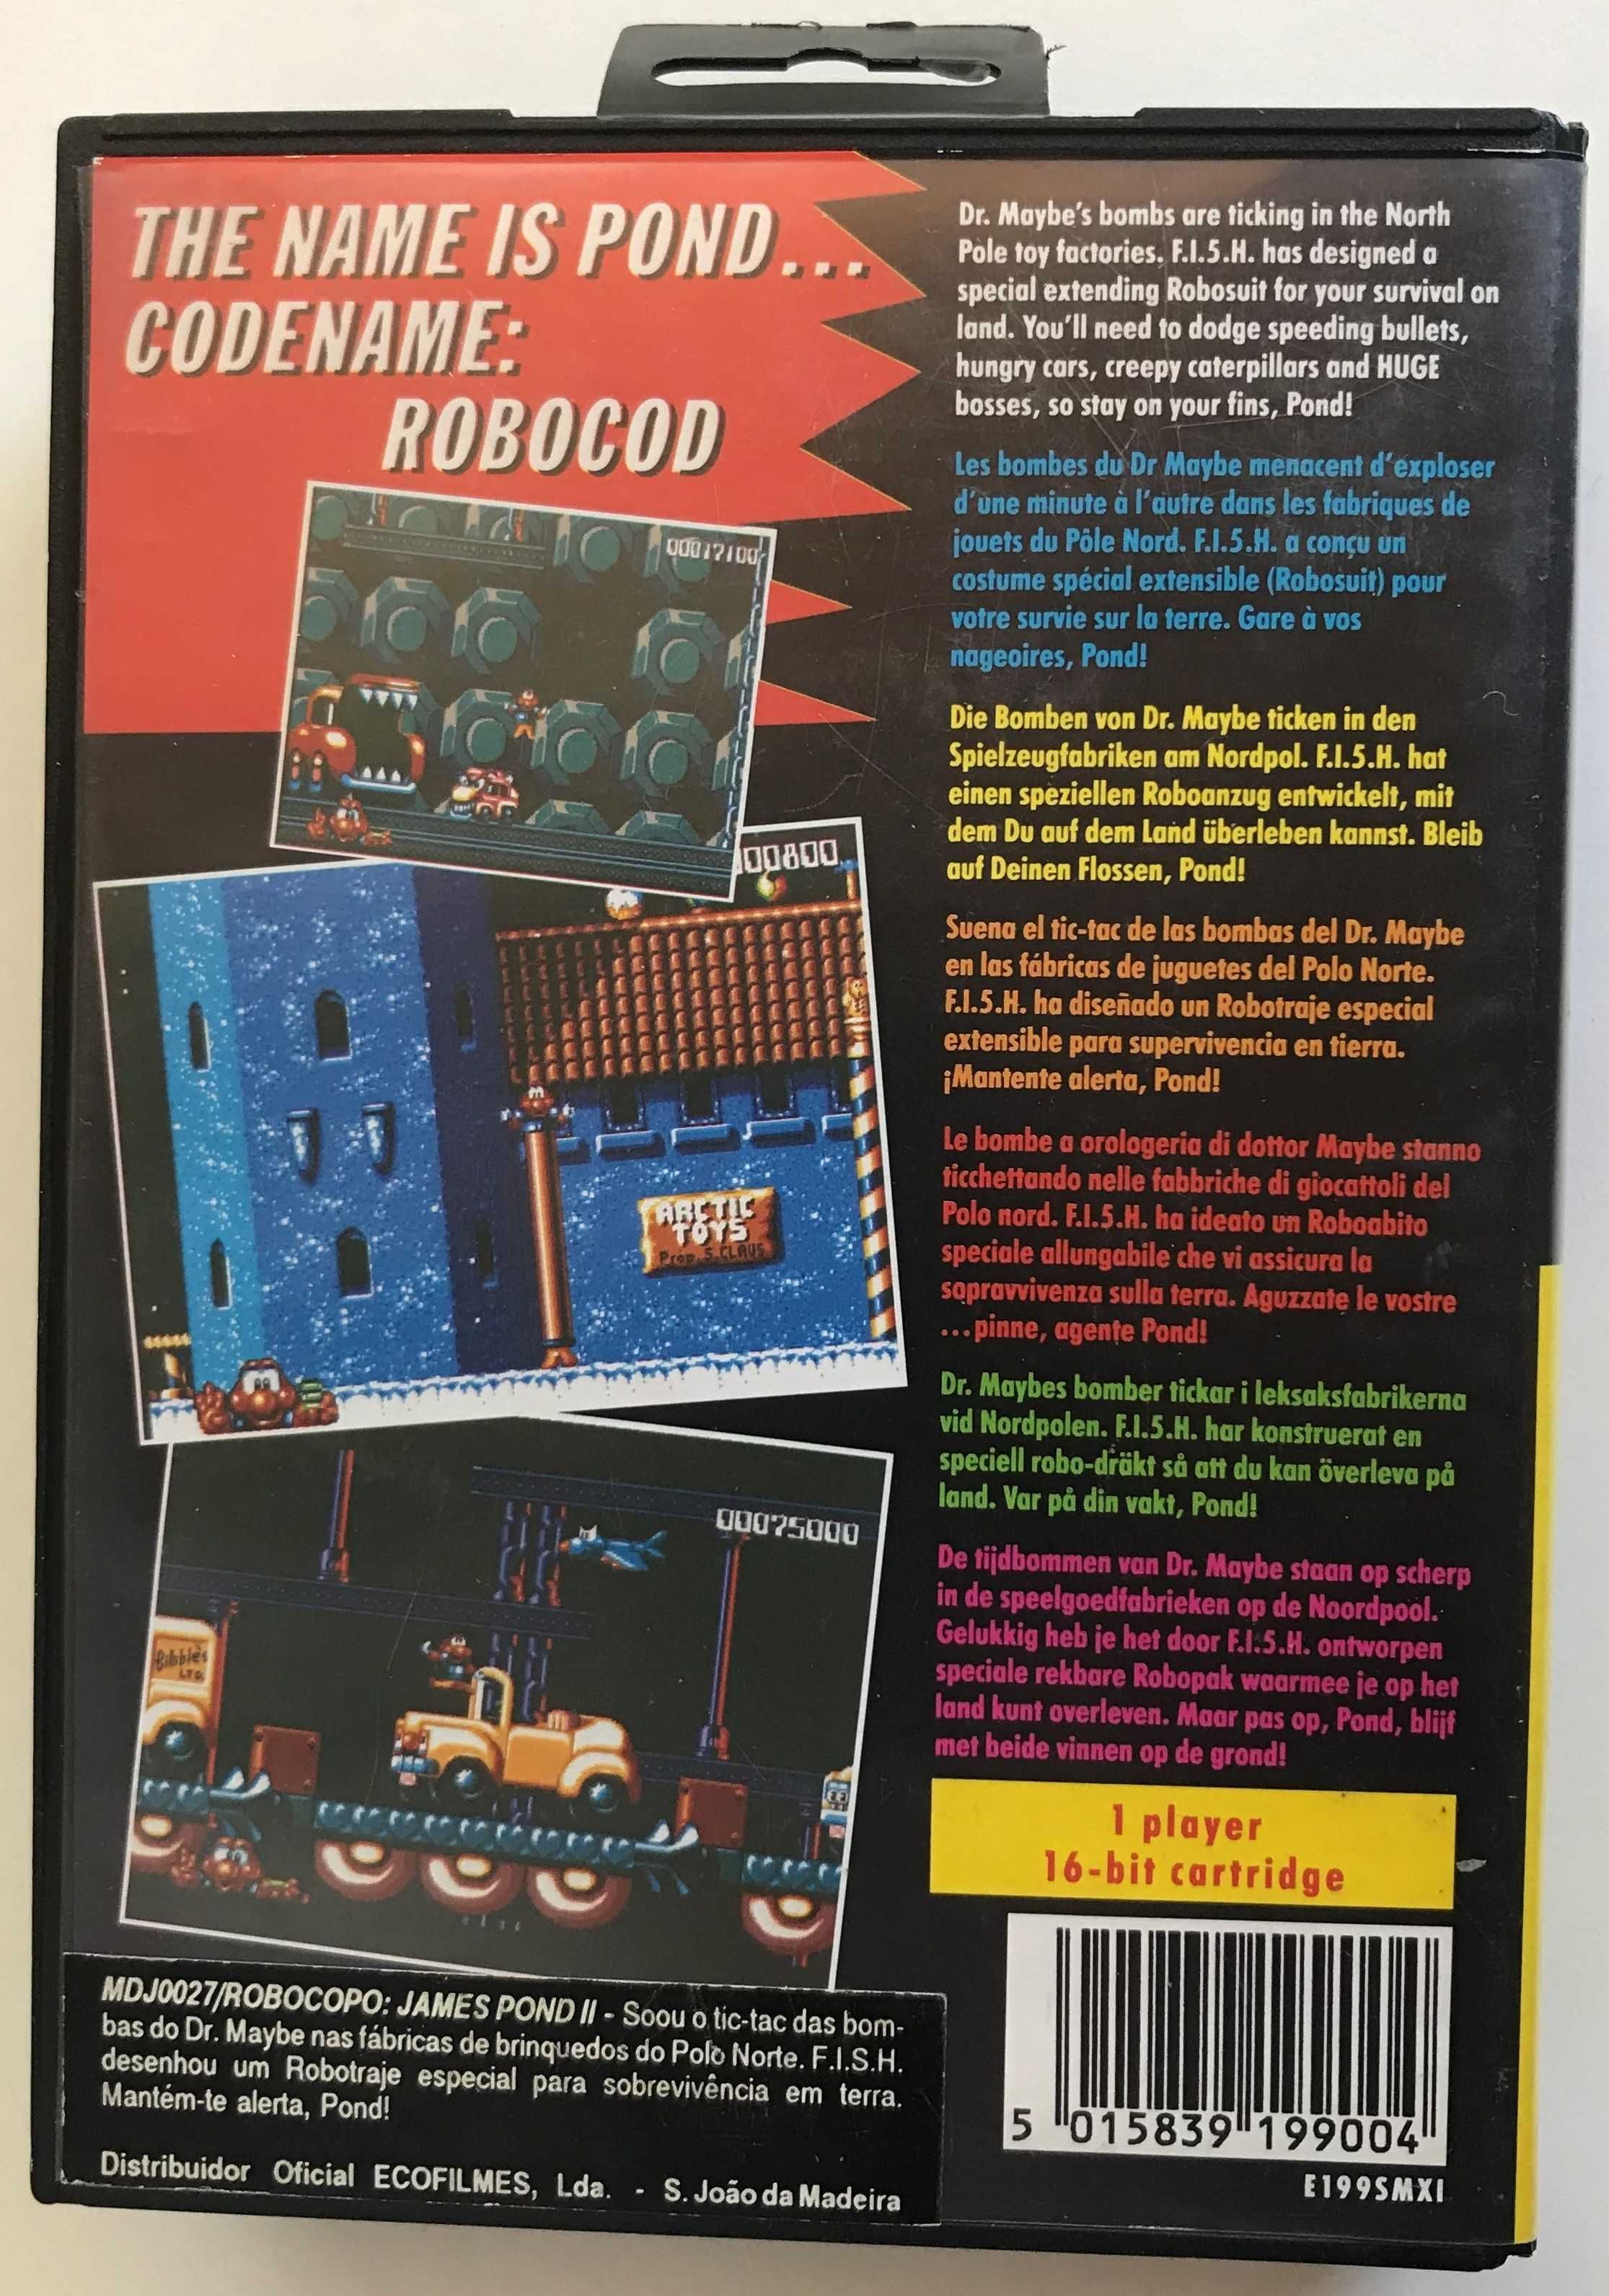 Jogo SEGA Megadrive "James Pond II: Codename Robocod" Original / 1991